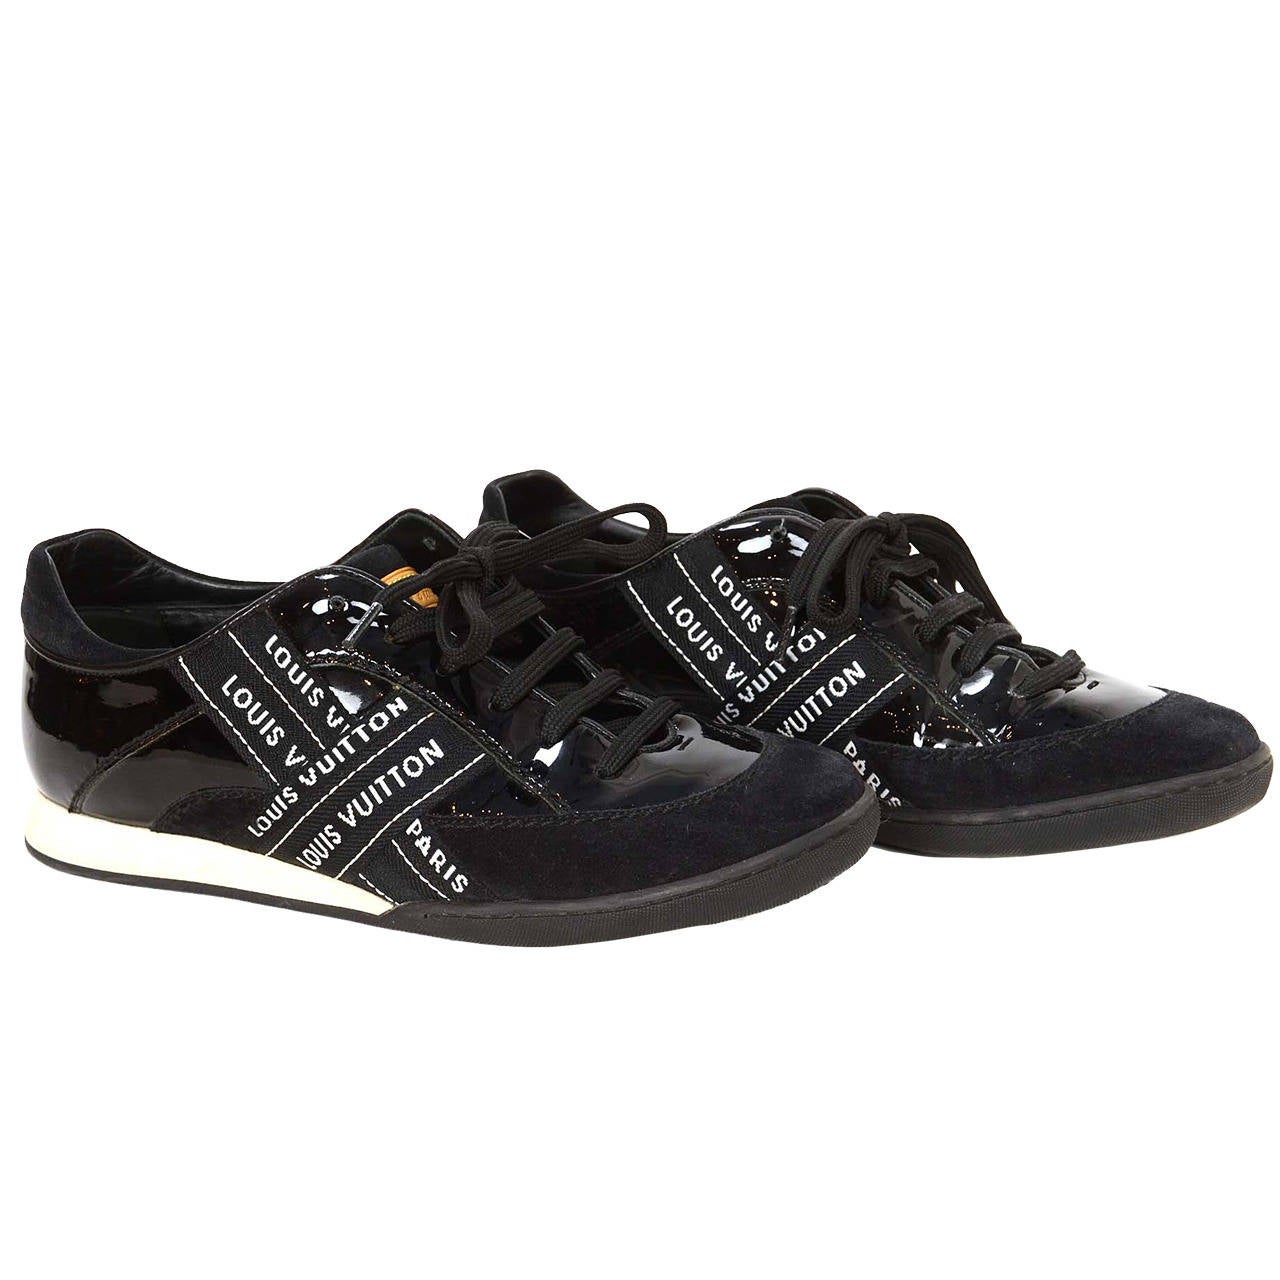 LOUIS VUITTON Black Patent Leather & Suede Sneakers sz 37.5